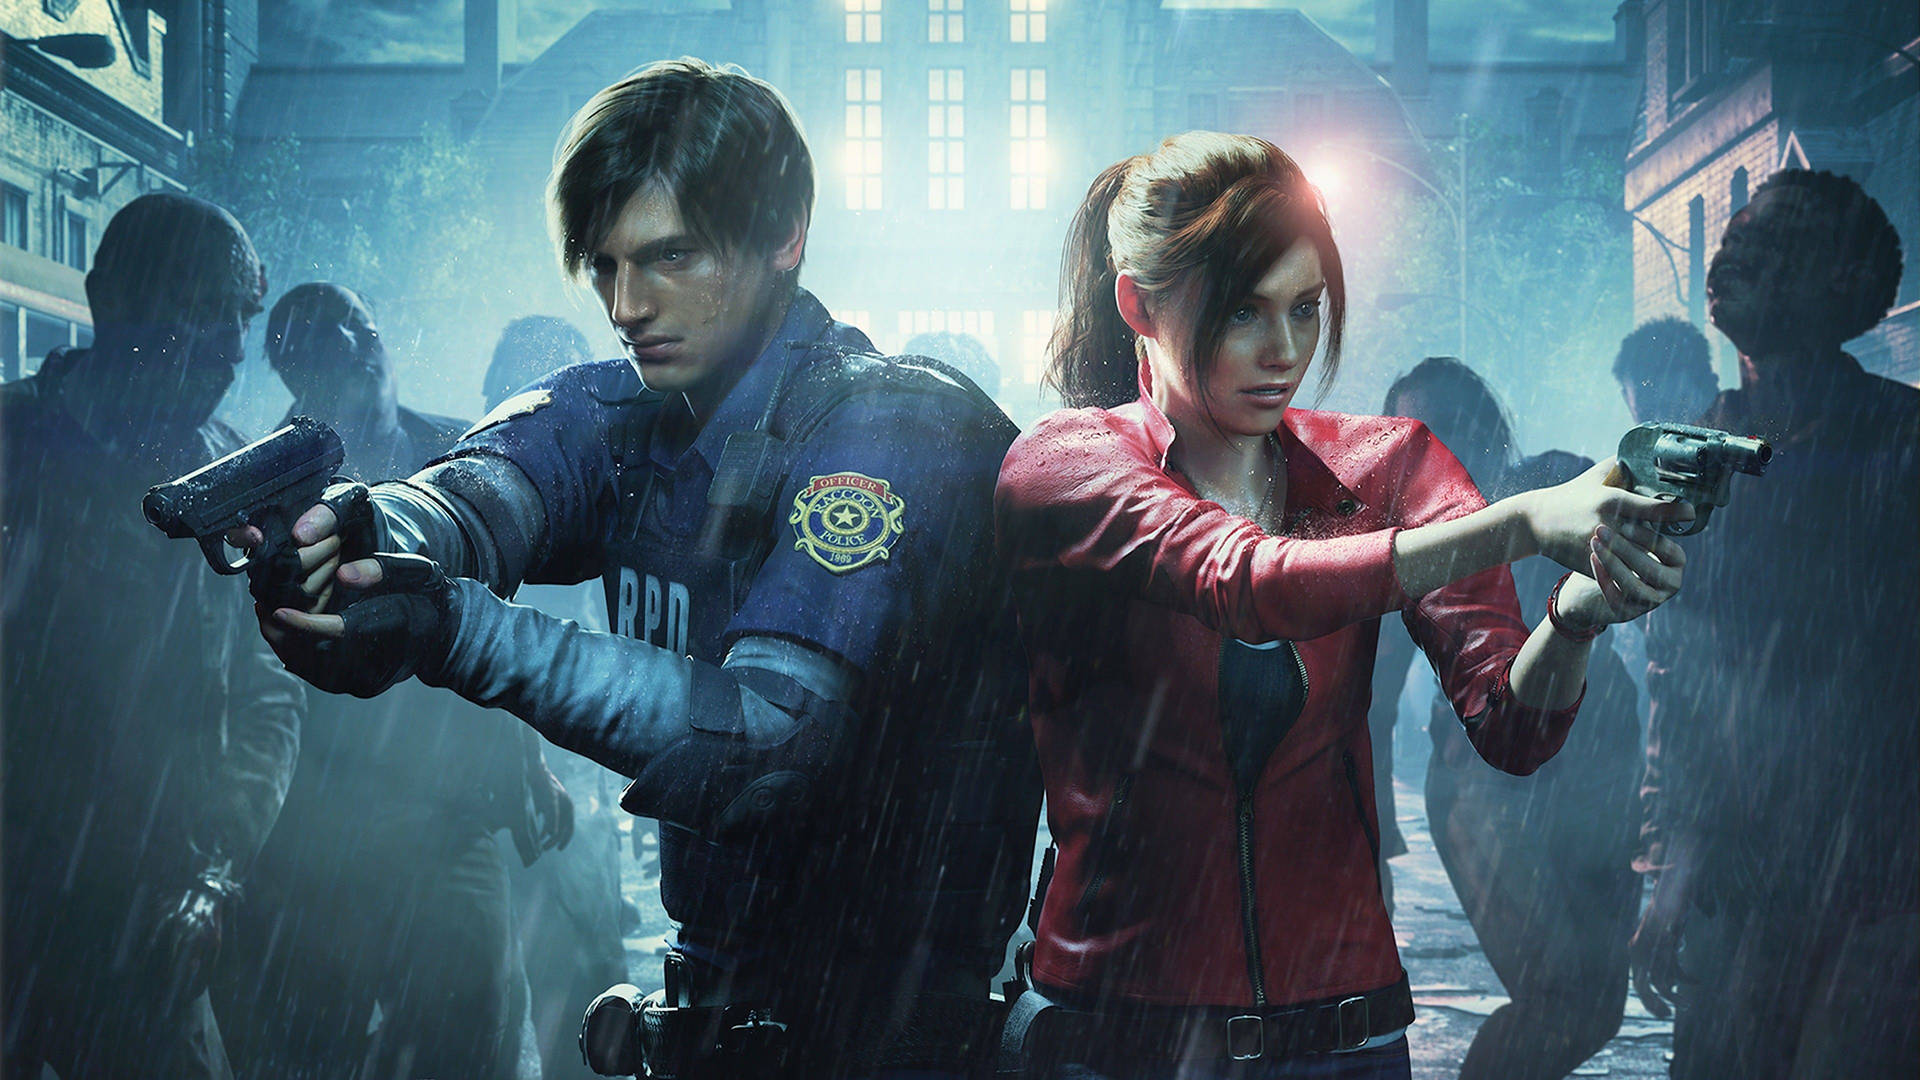 Free Resident Evil 2 Remake Wallpaper Downloads, [100+] Resident Evil 2  Remake Wallpapers for FREE 